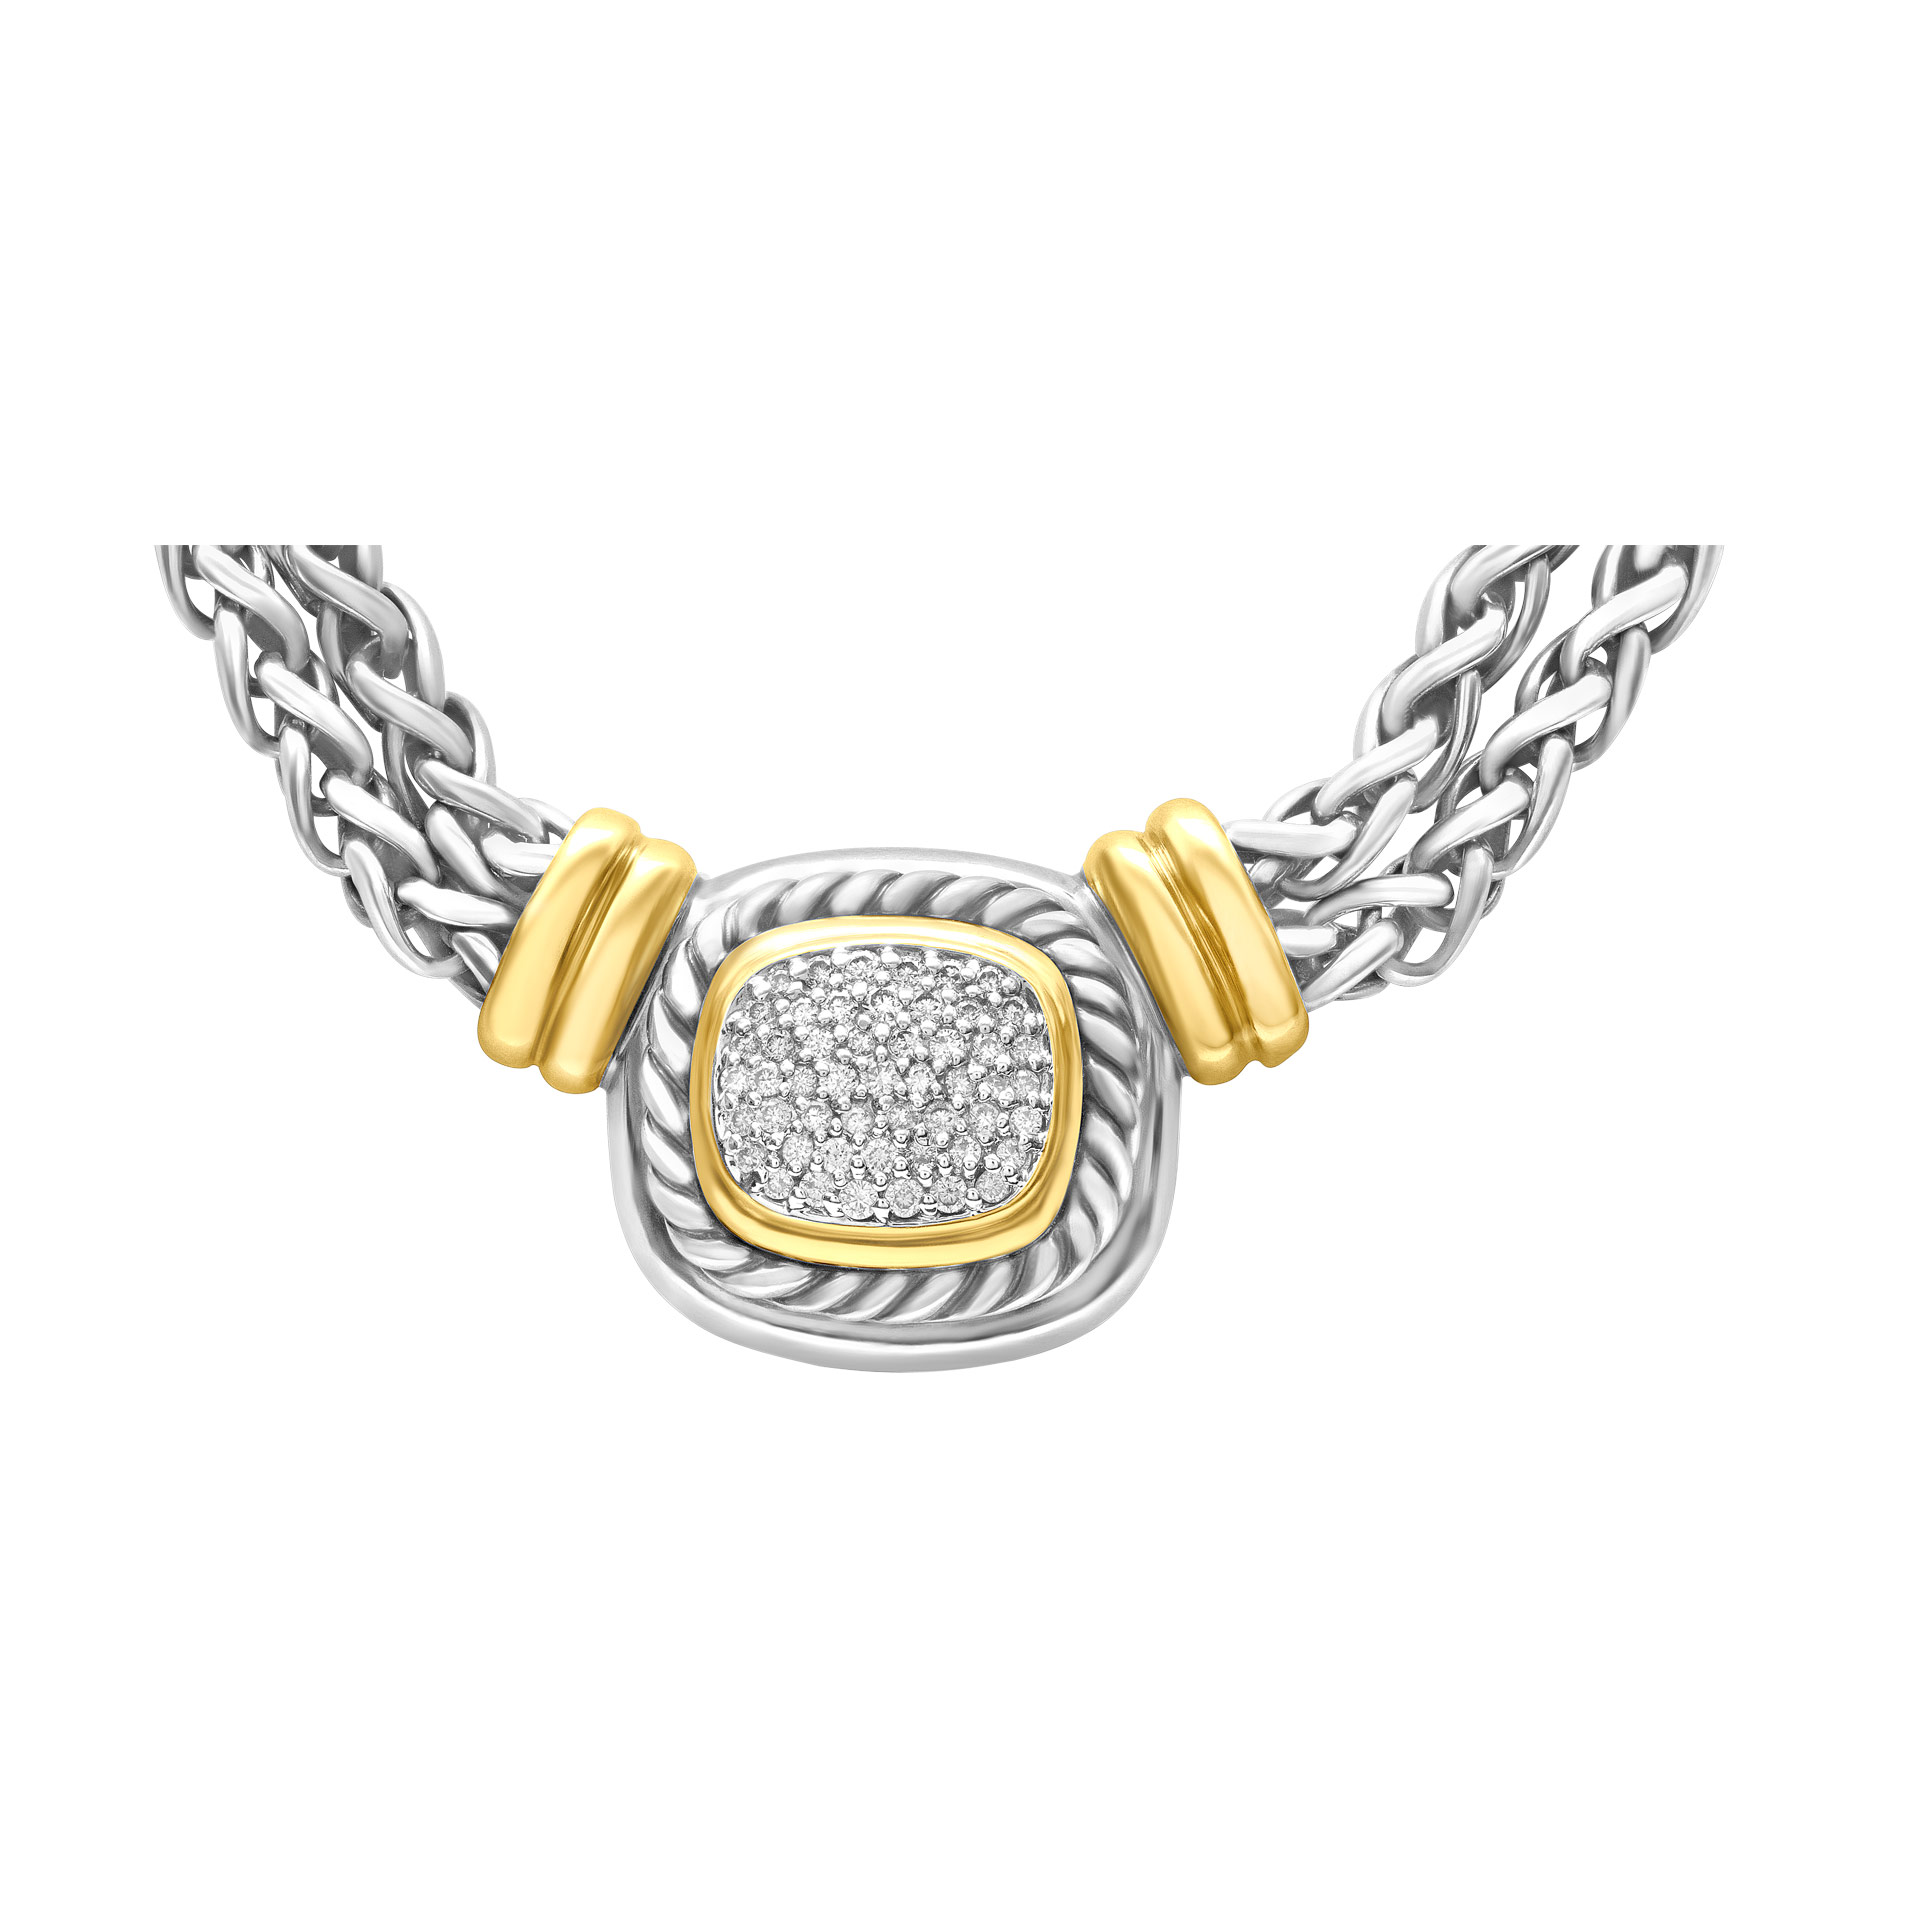 Modern David Yurman necklace with diamond pendant. image 1